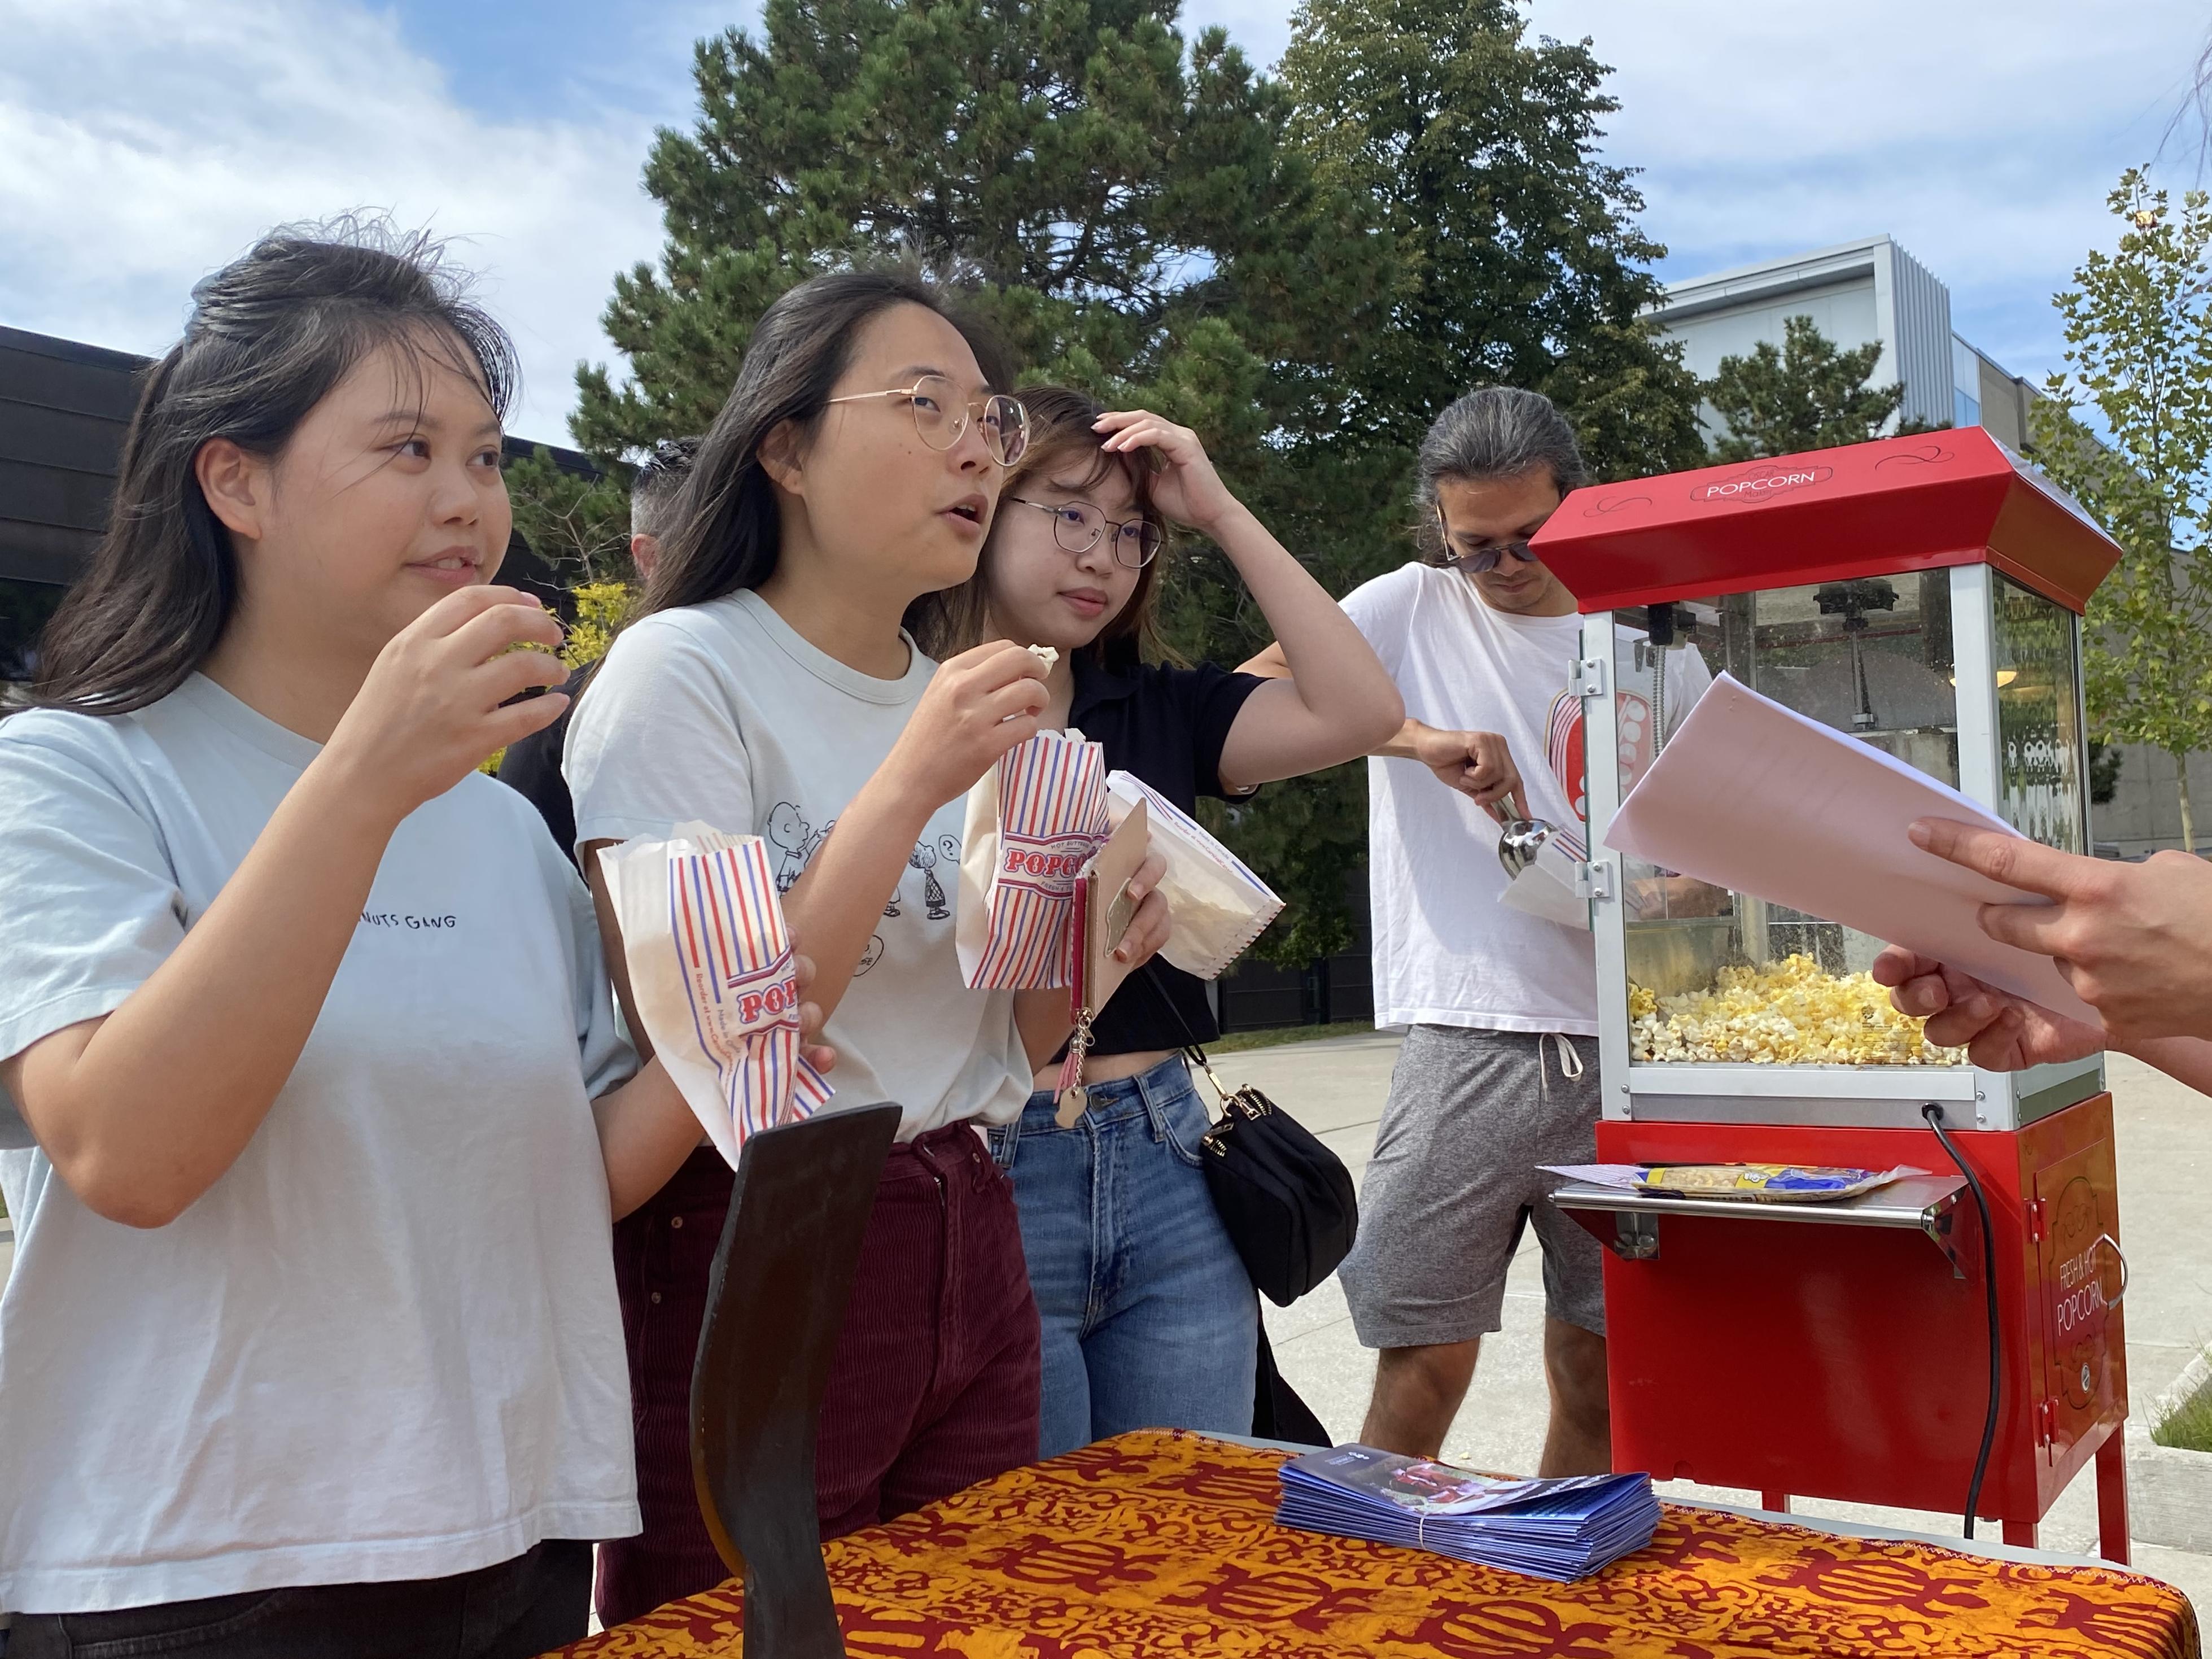 Students eating popcorn